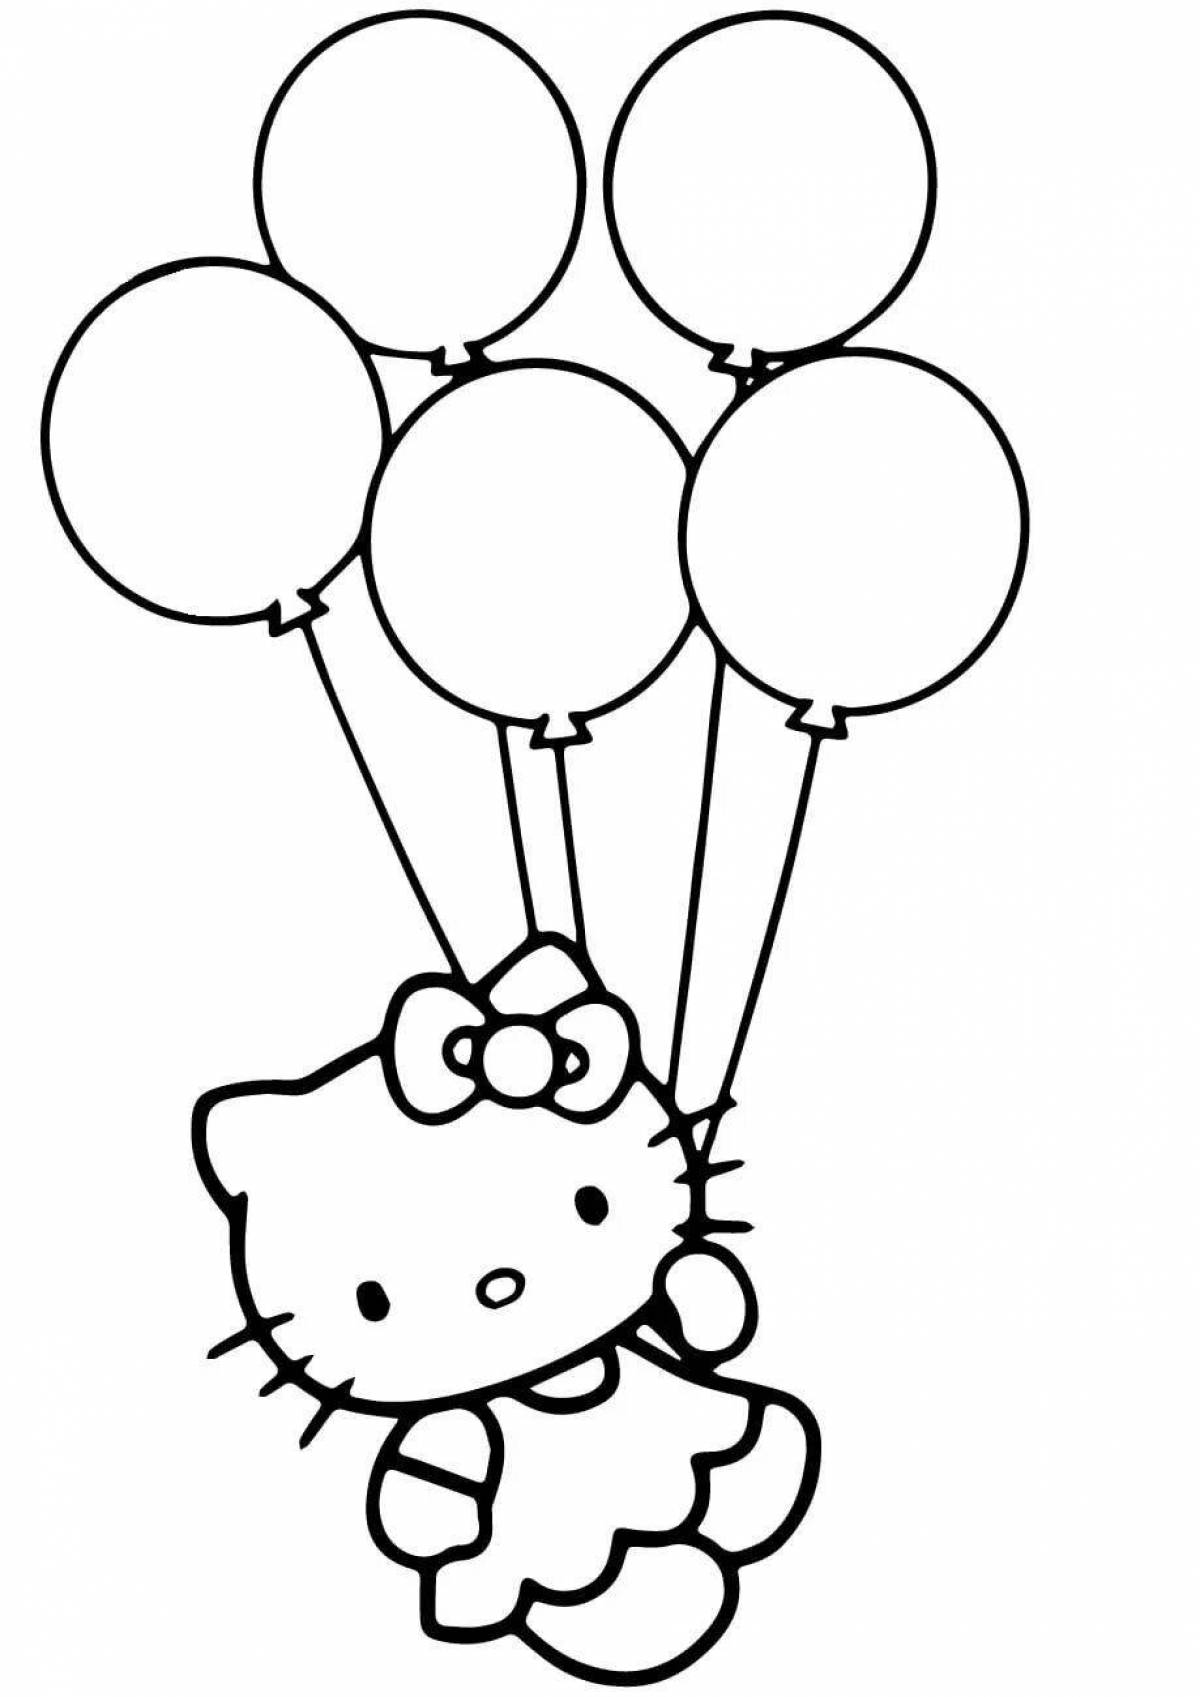 Color-mania balloons coloring page для детей 3-4 лет